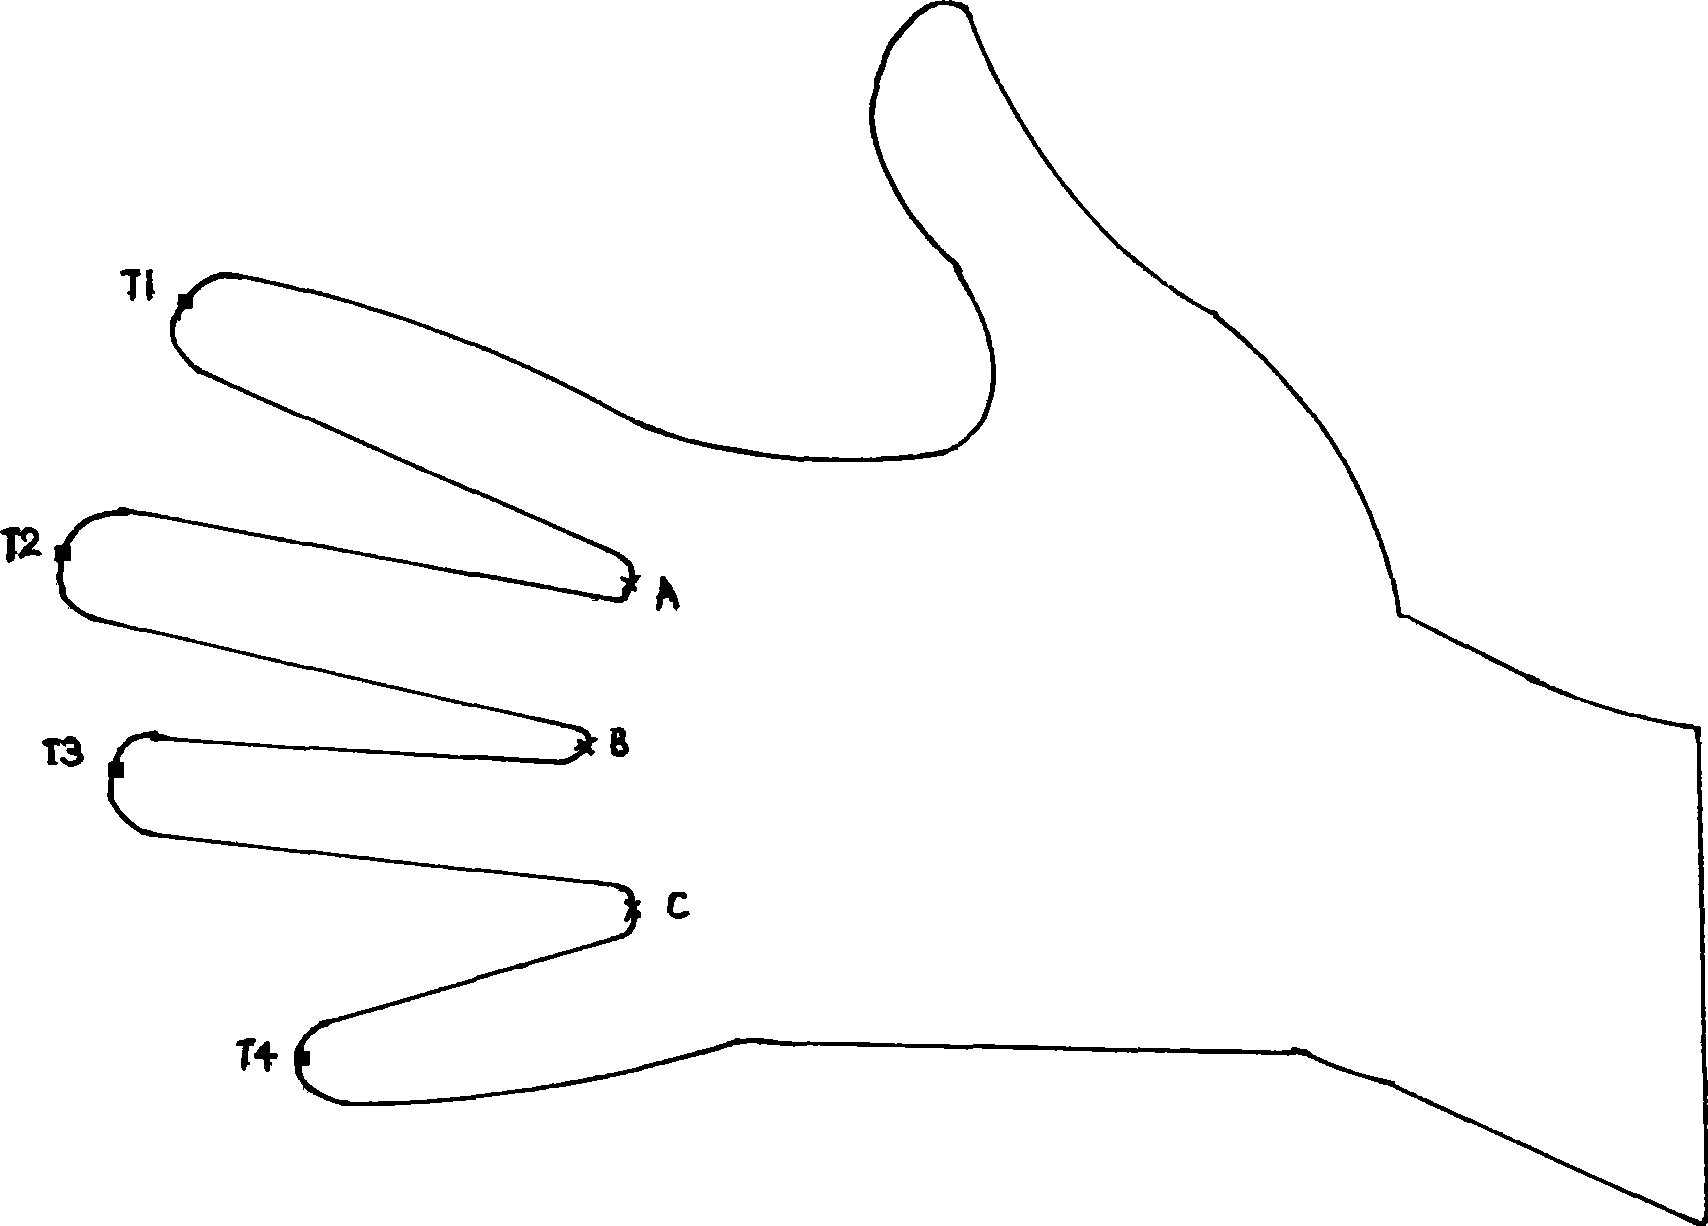 Hand shape recognition method